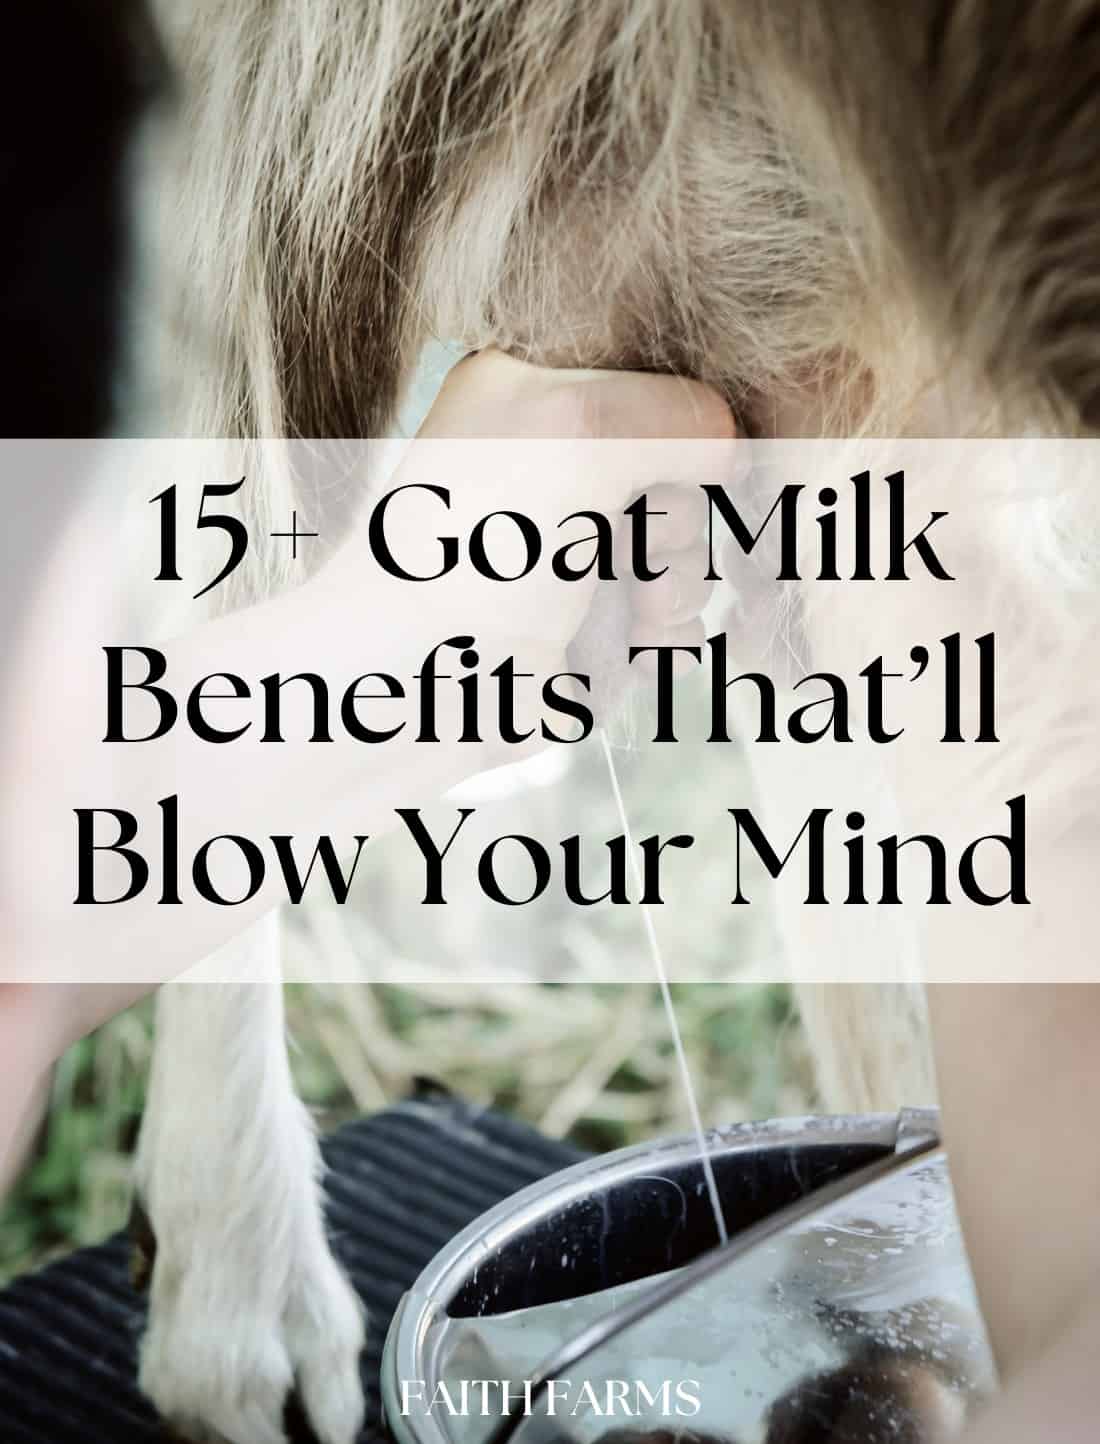 15+ Goat Milk Benefits That'll Blow Your Mind